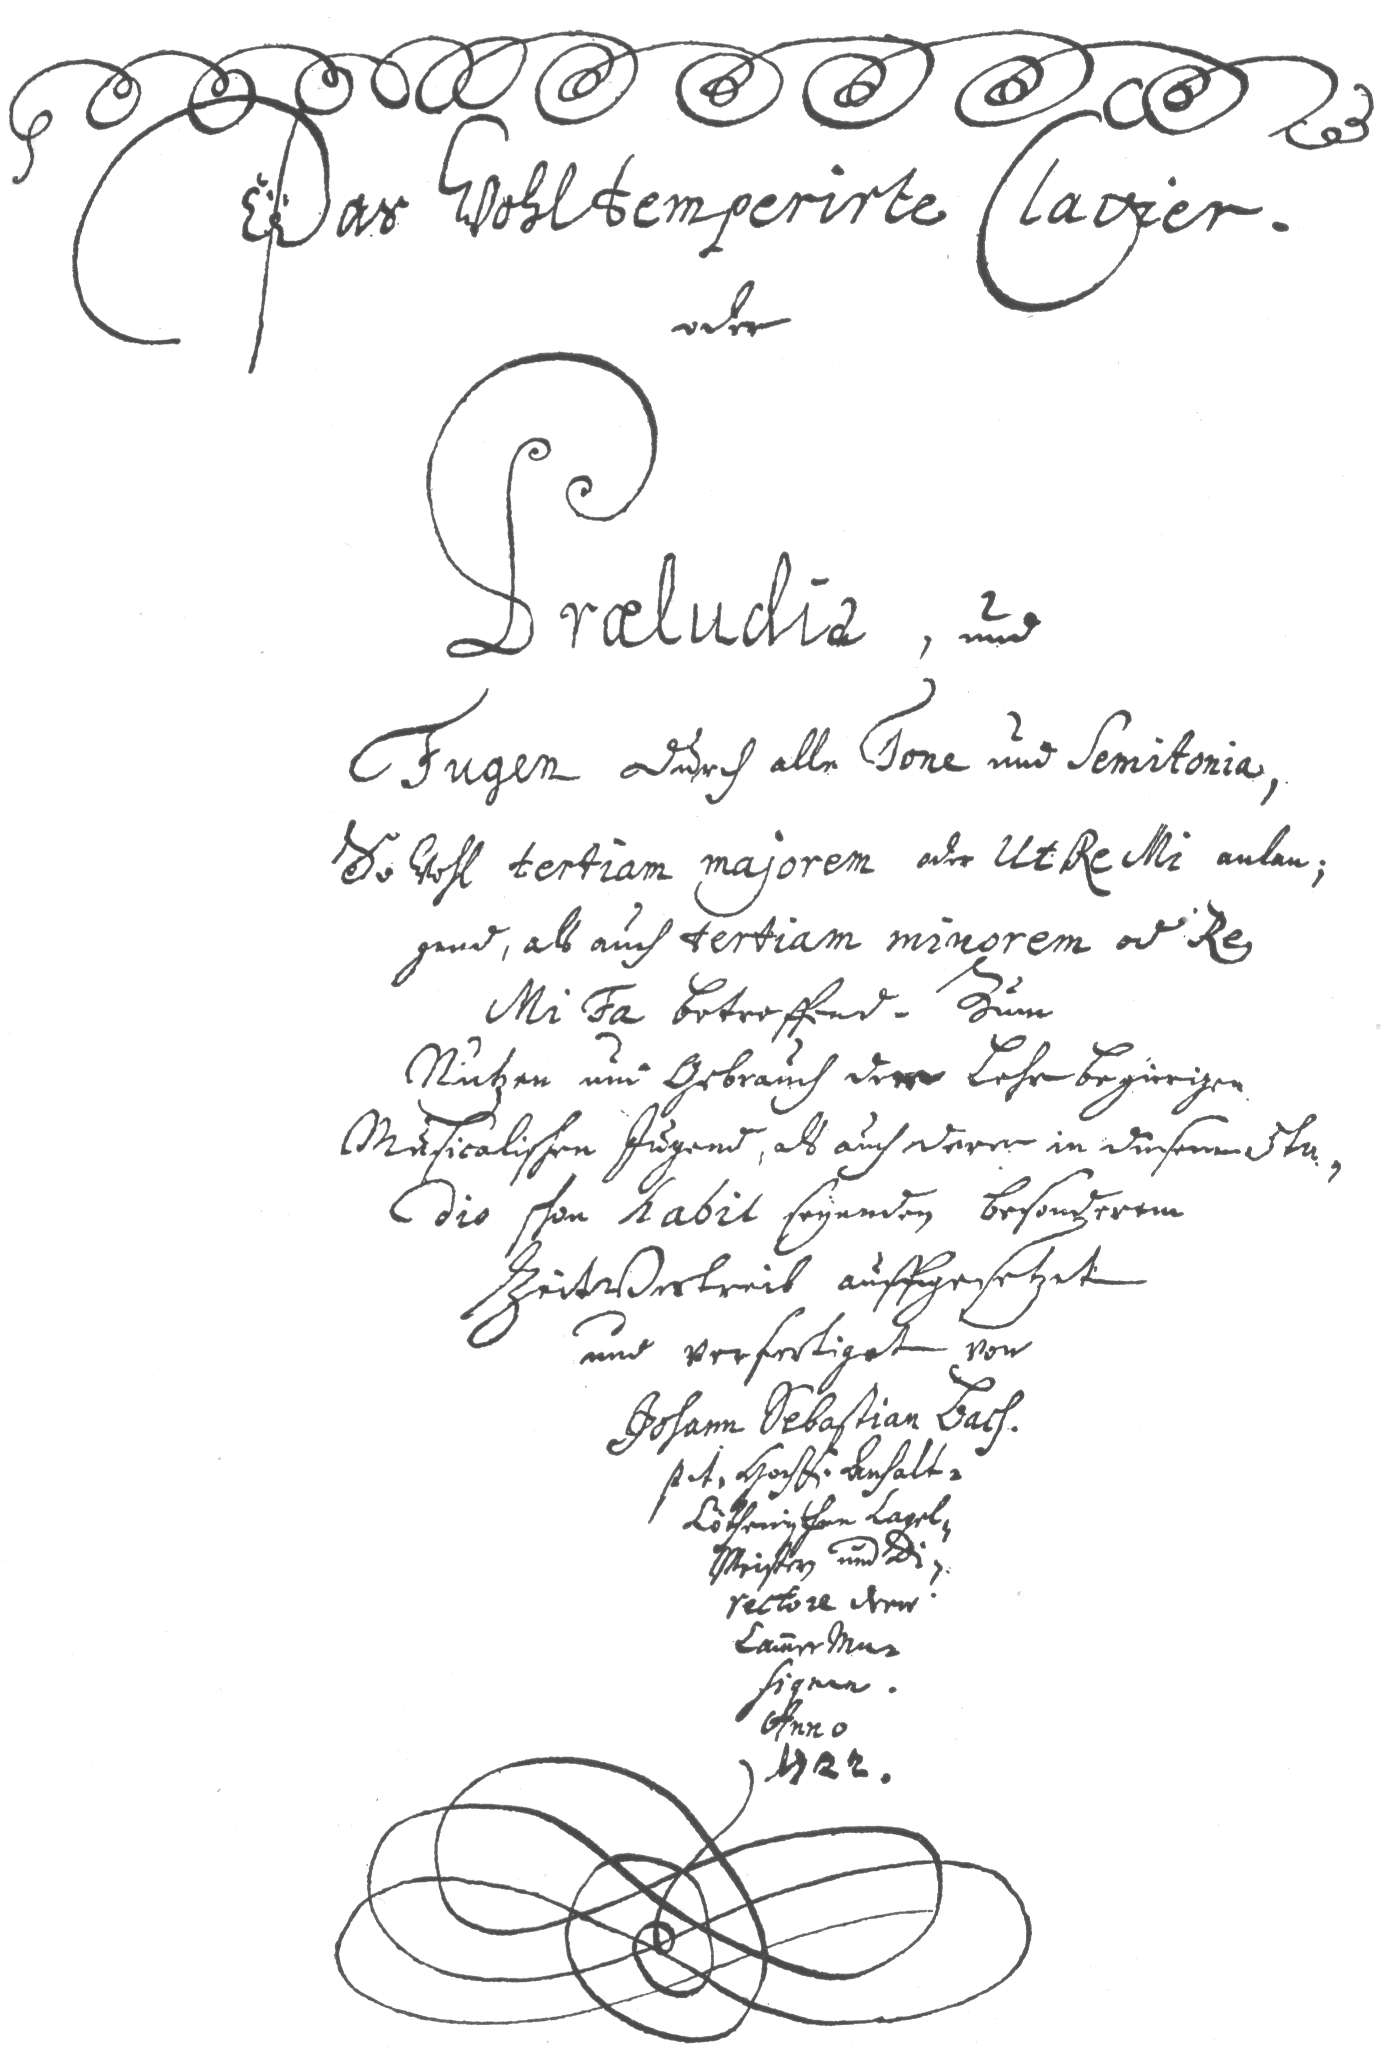 J.S. Bach's hand writing